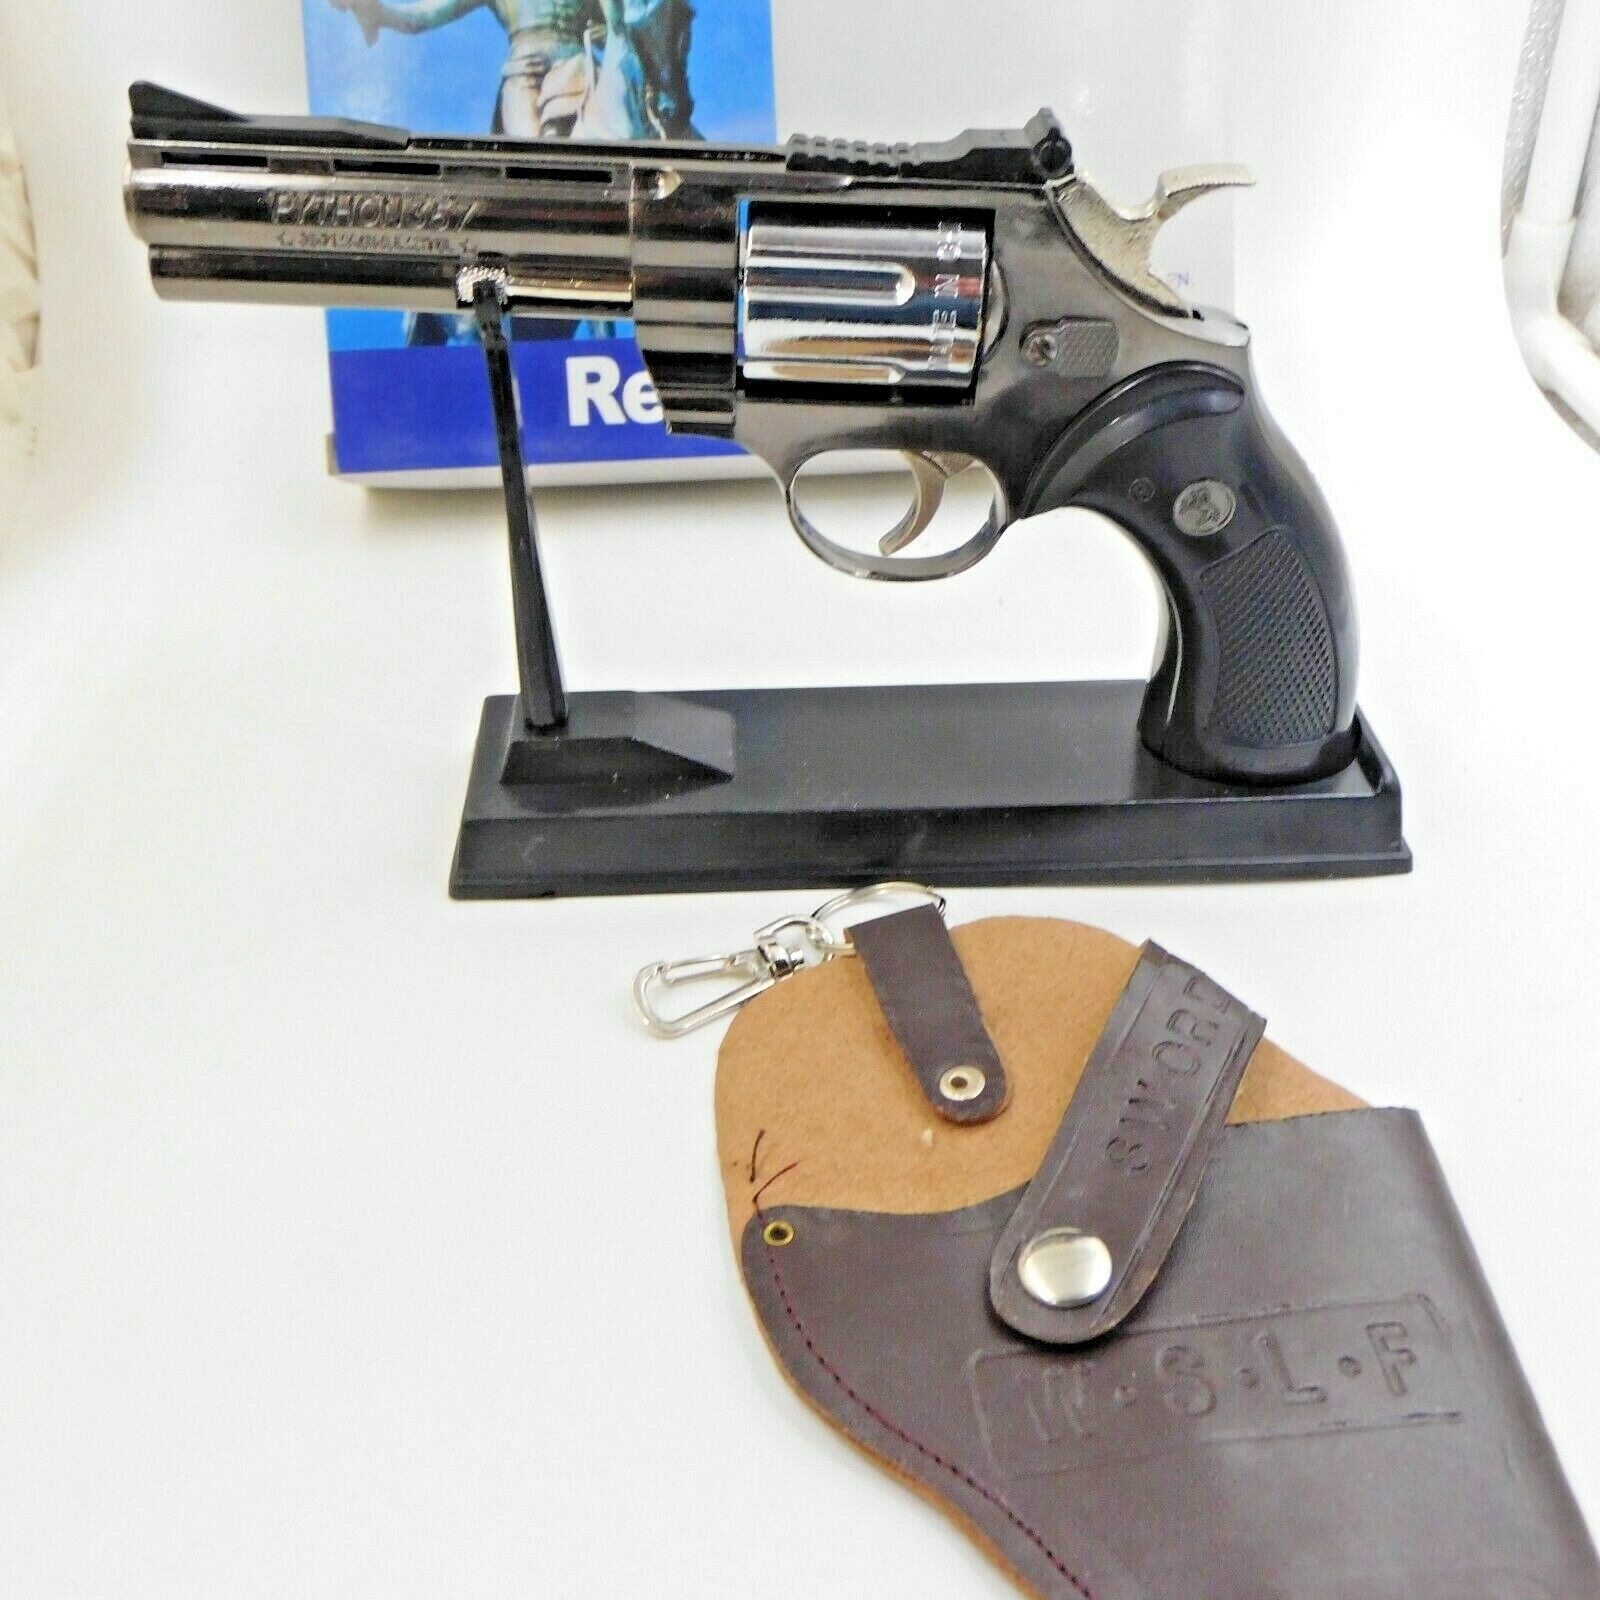 Junior Colt Python 357 Gun Pistol Jet Torch Lighter USA Stocked And Shipped